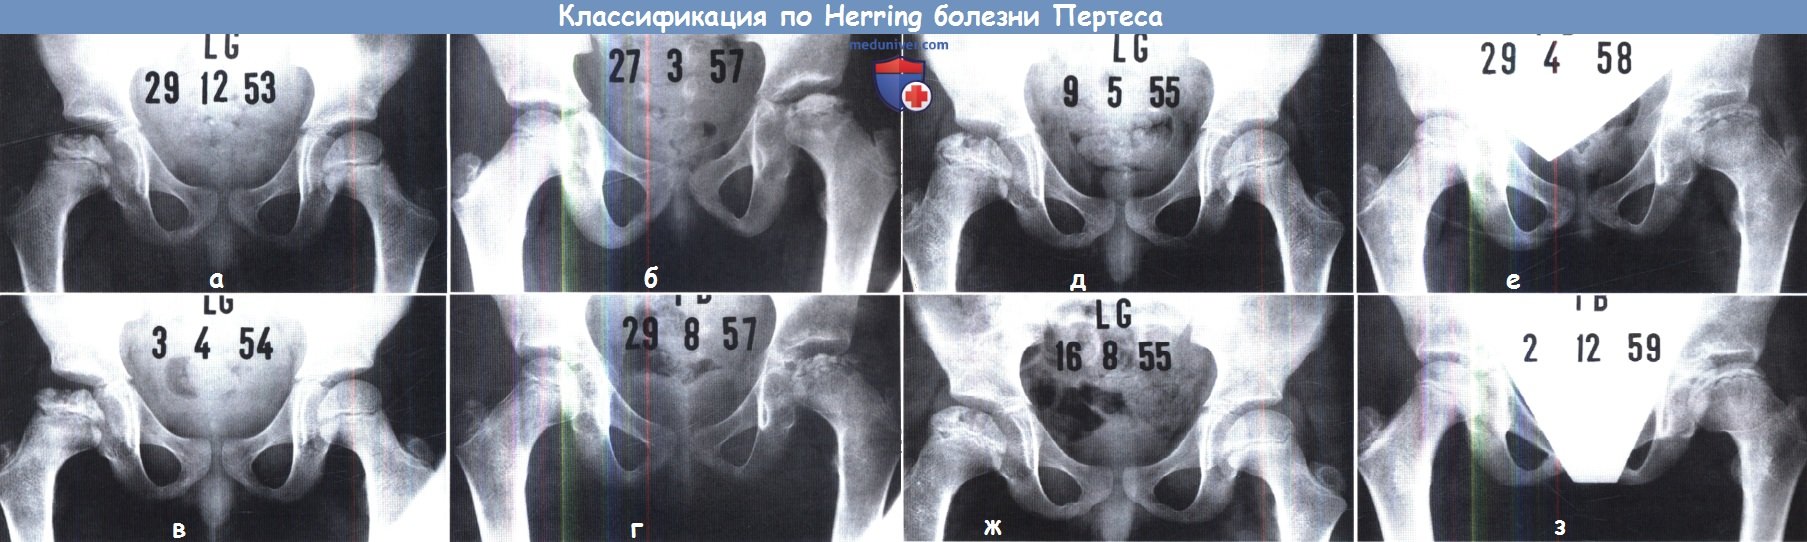 Классификация по Herring болезни Пертеса